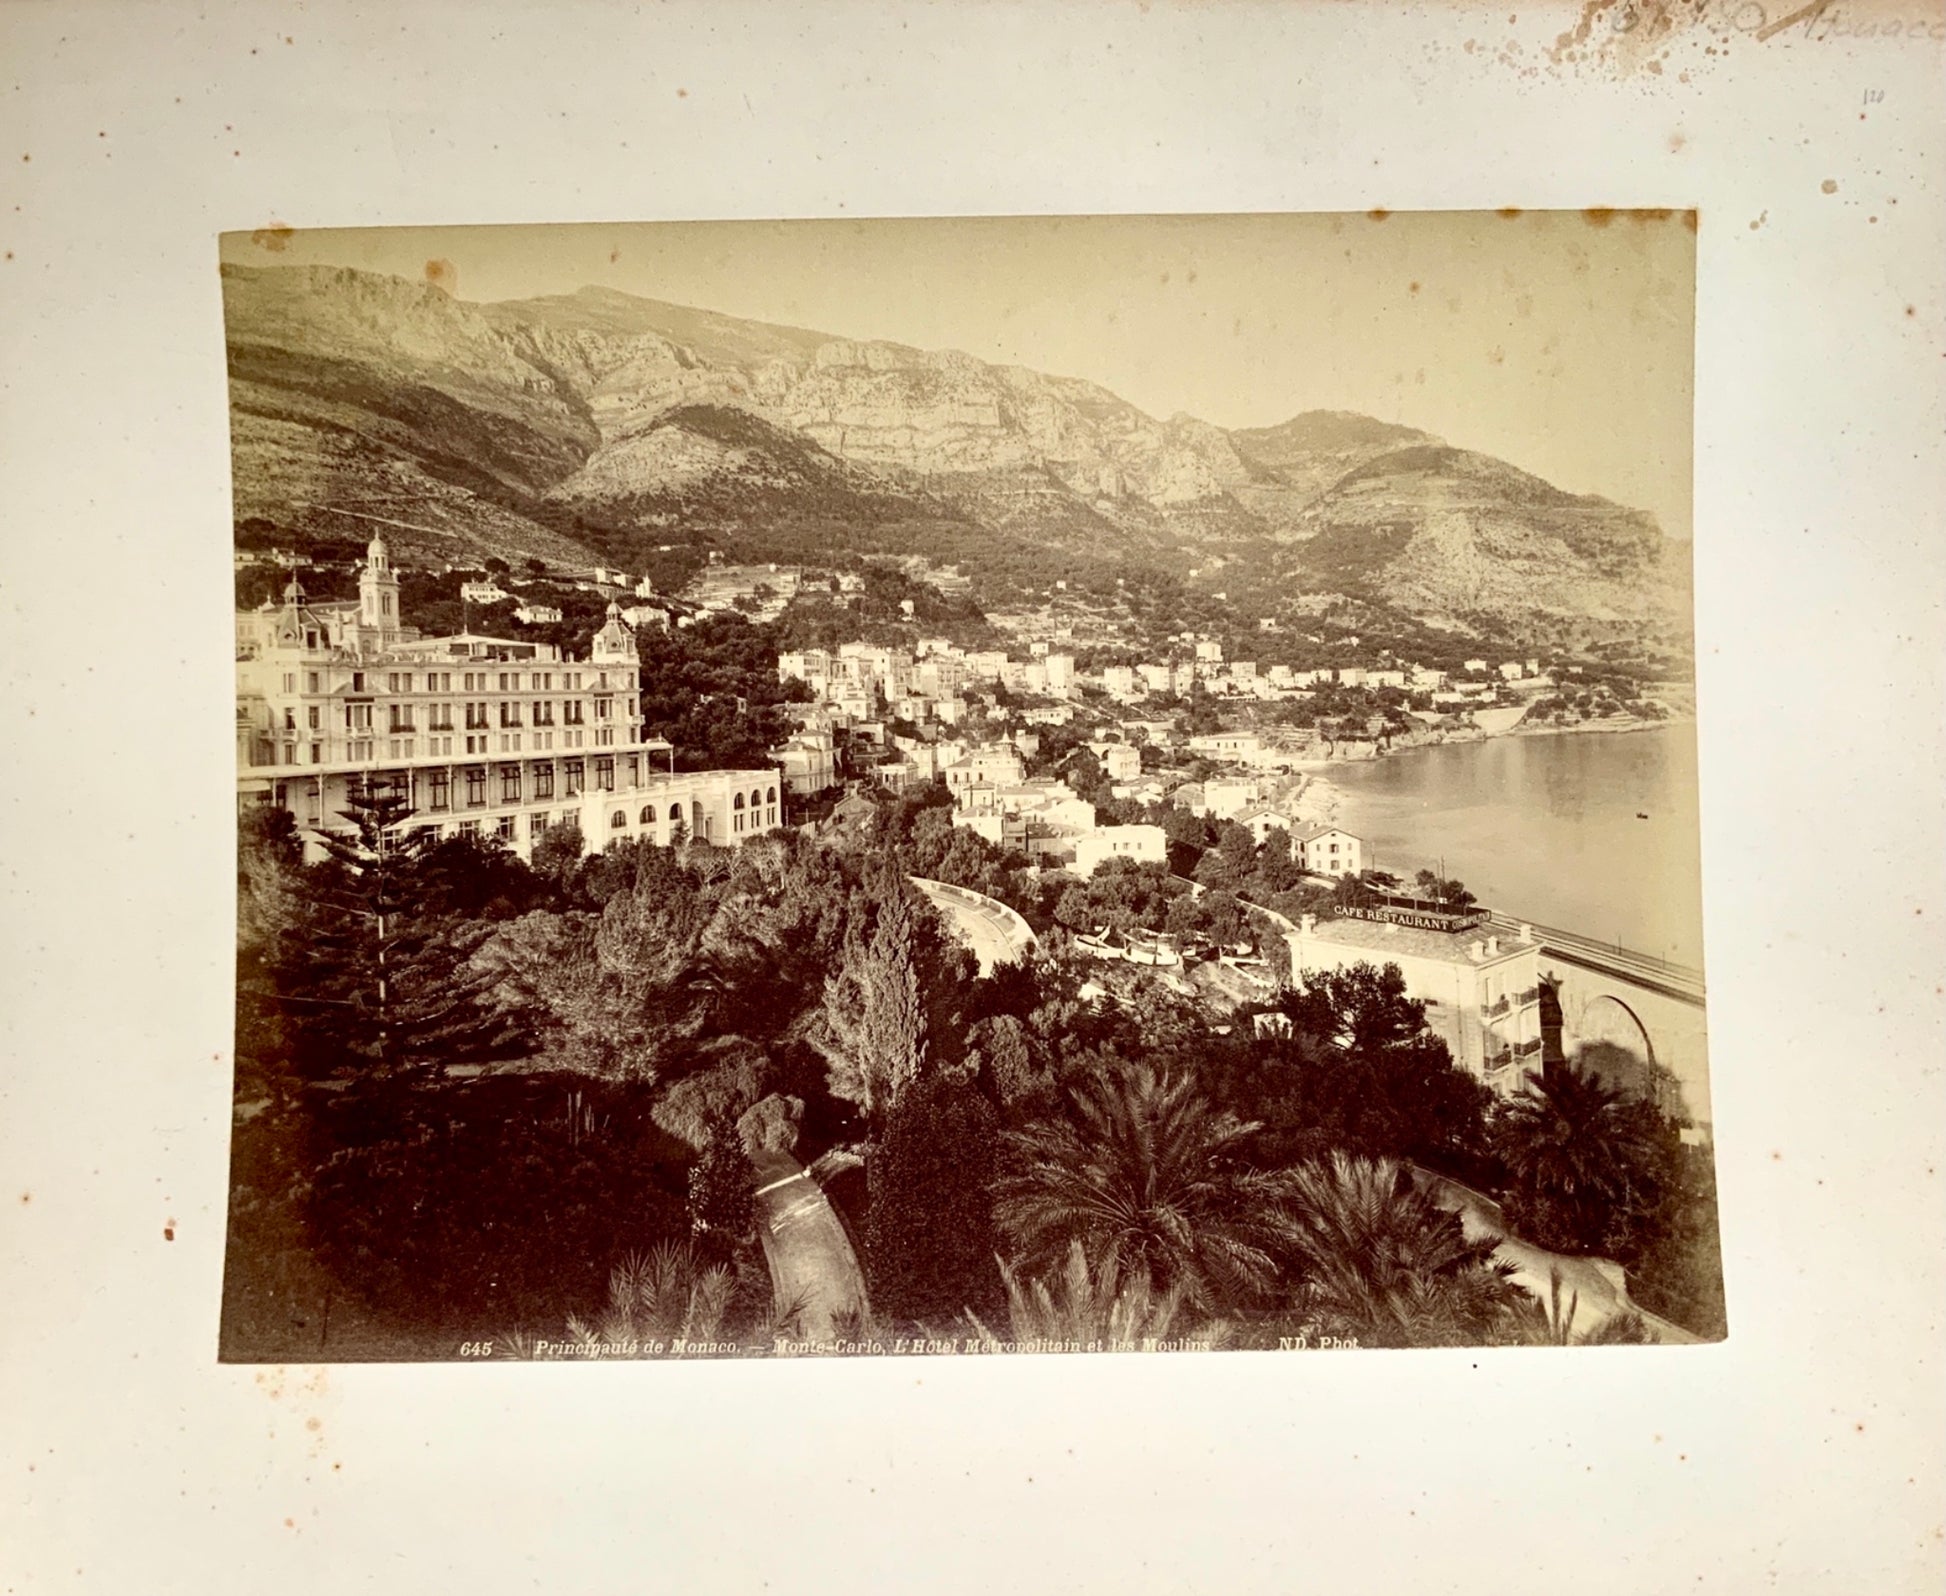 1880 c. ! 2 ! Large albumen photograph of the Monaco